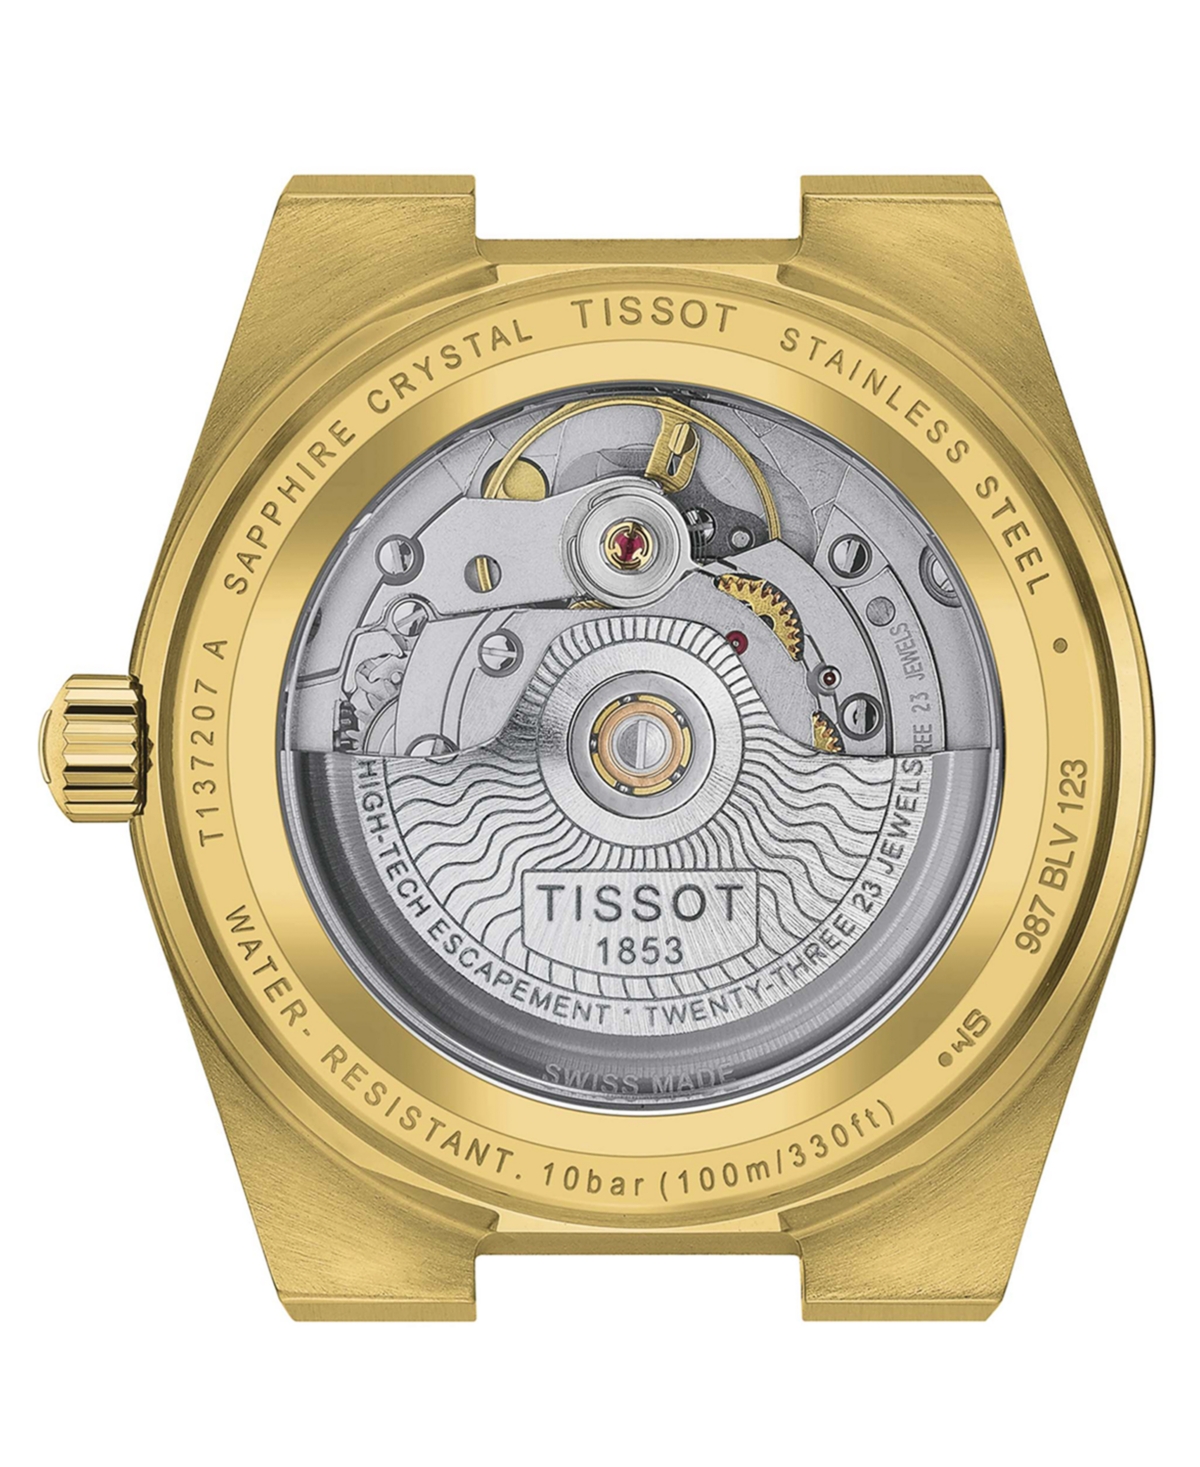 Shop Tissot Women's Swiss Automatic Prx Powermatic 80 Gold Pvd Stainless Steel Bracelet Watch 35mm